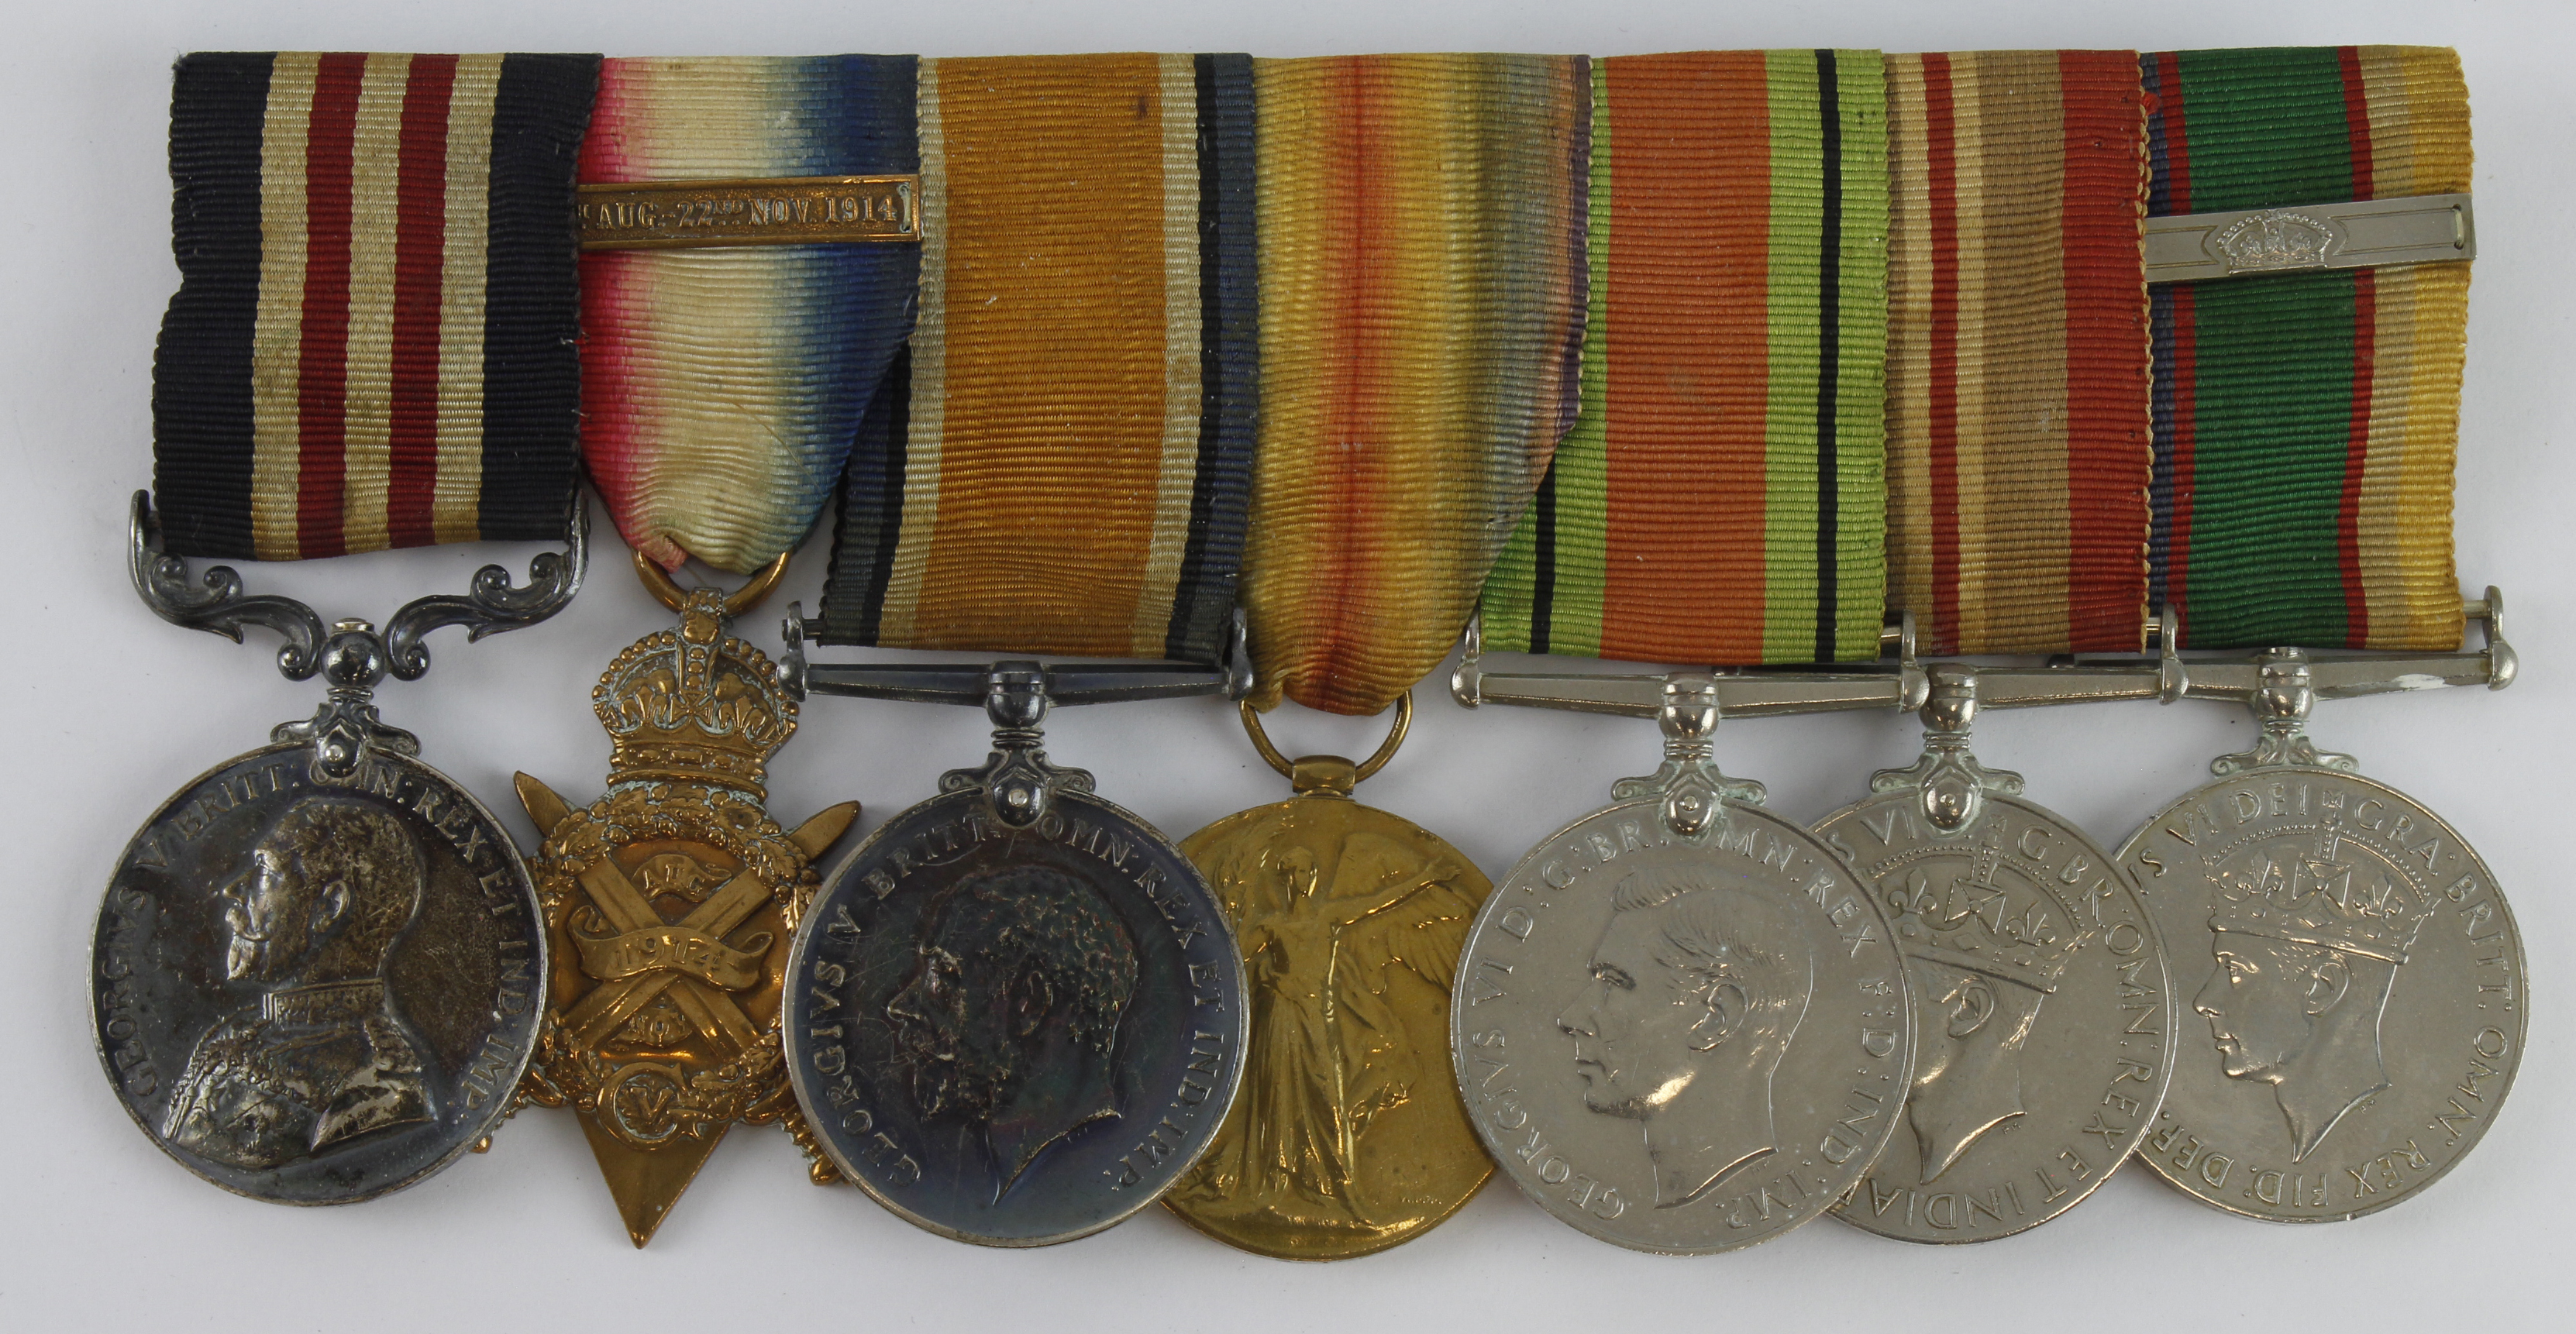 Military Medal GV (9736 Sjt J G Ingham 1/Glouc R), 1914 Star Trio with original Aug-Nov clasp (